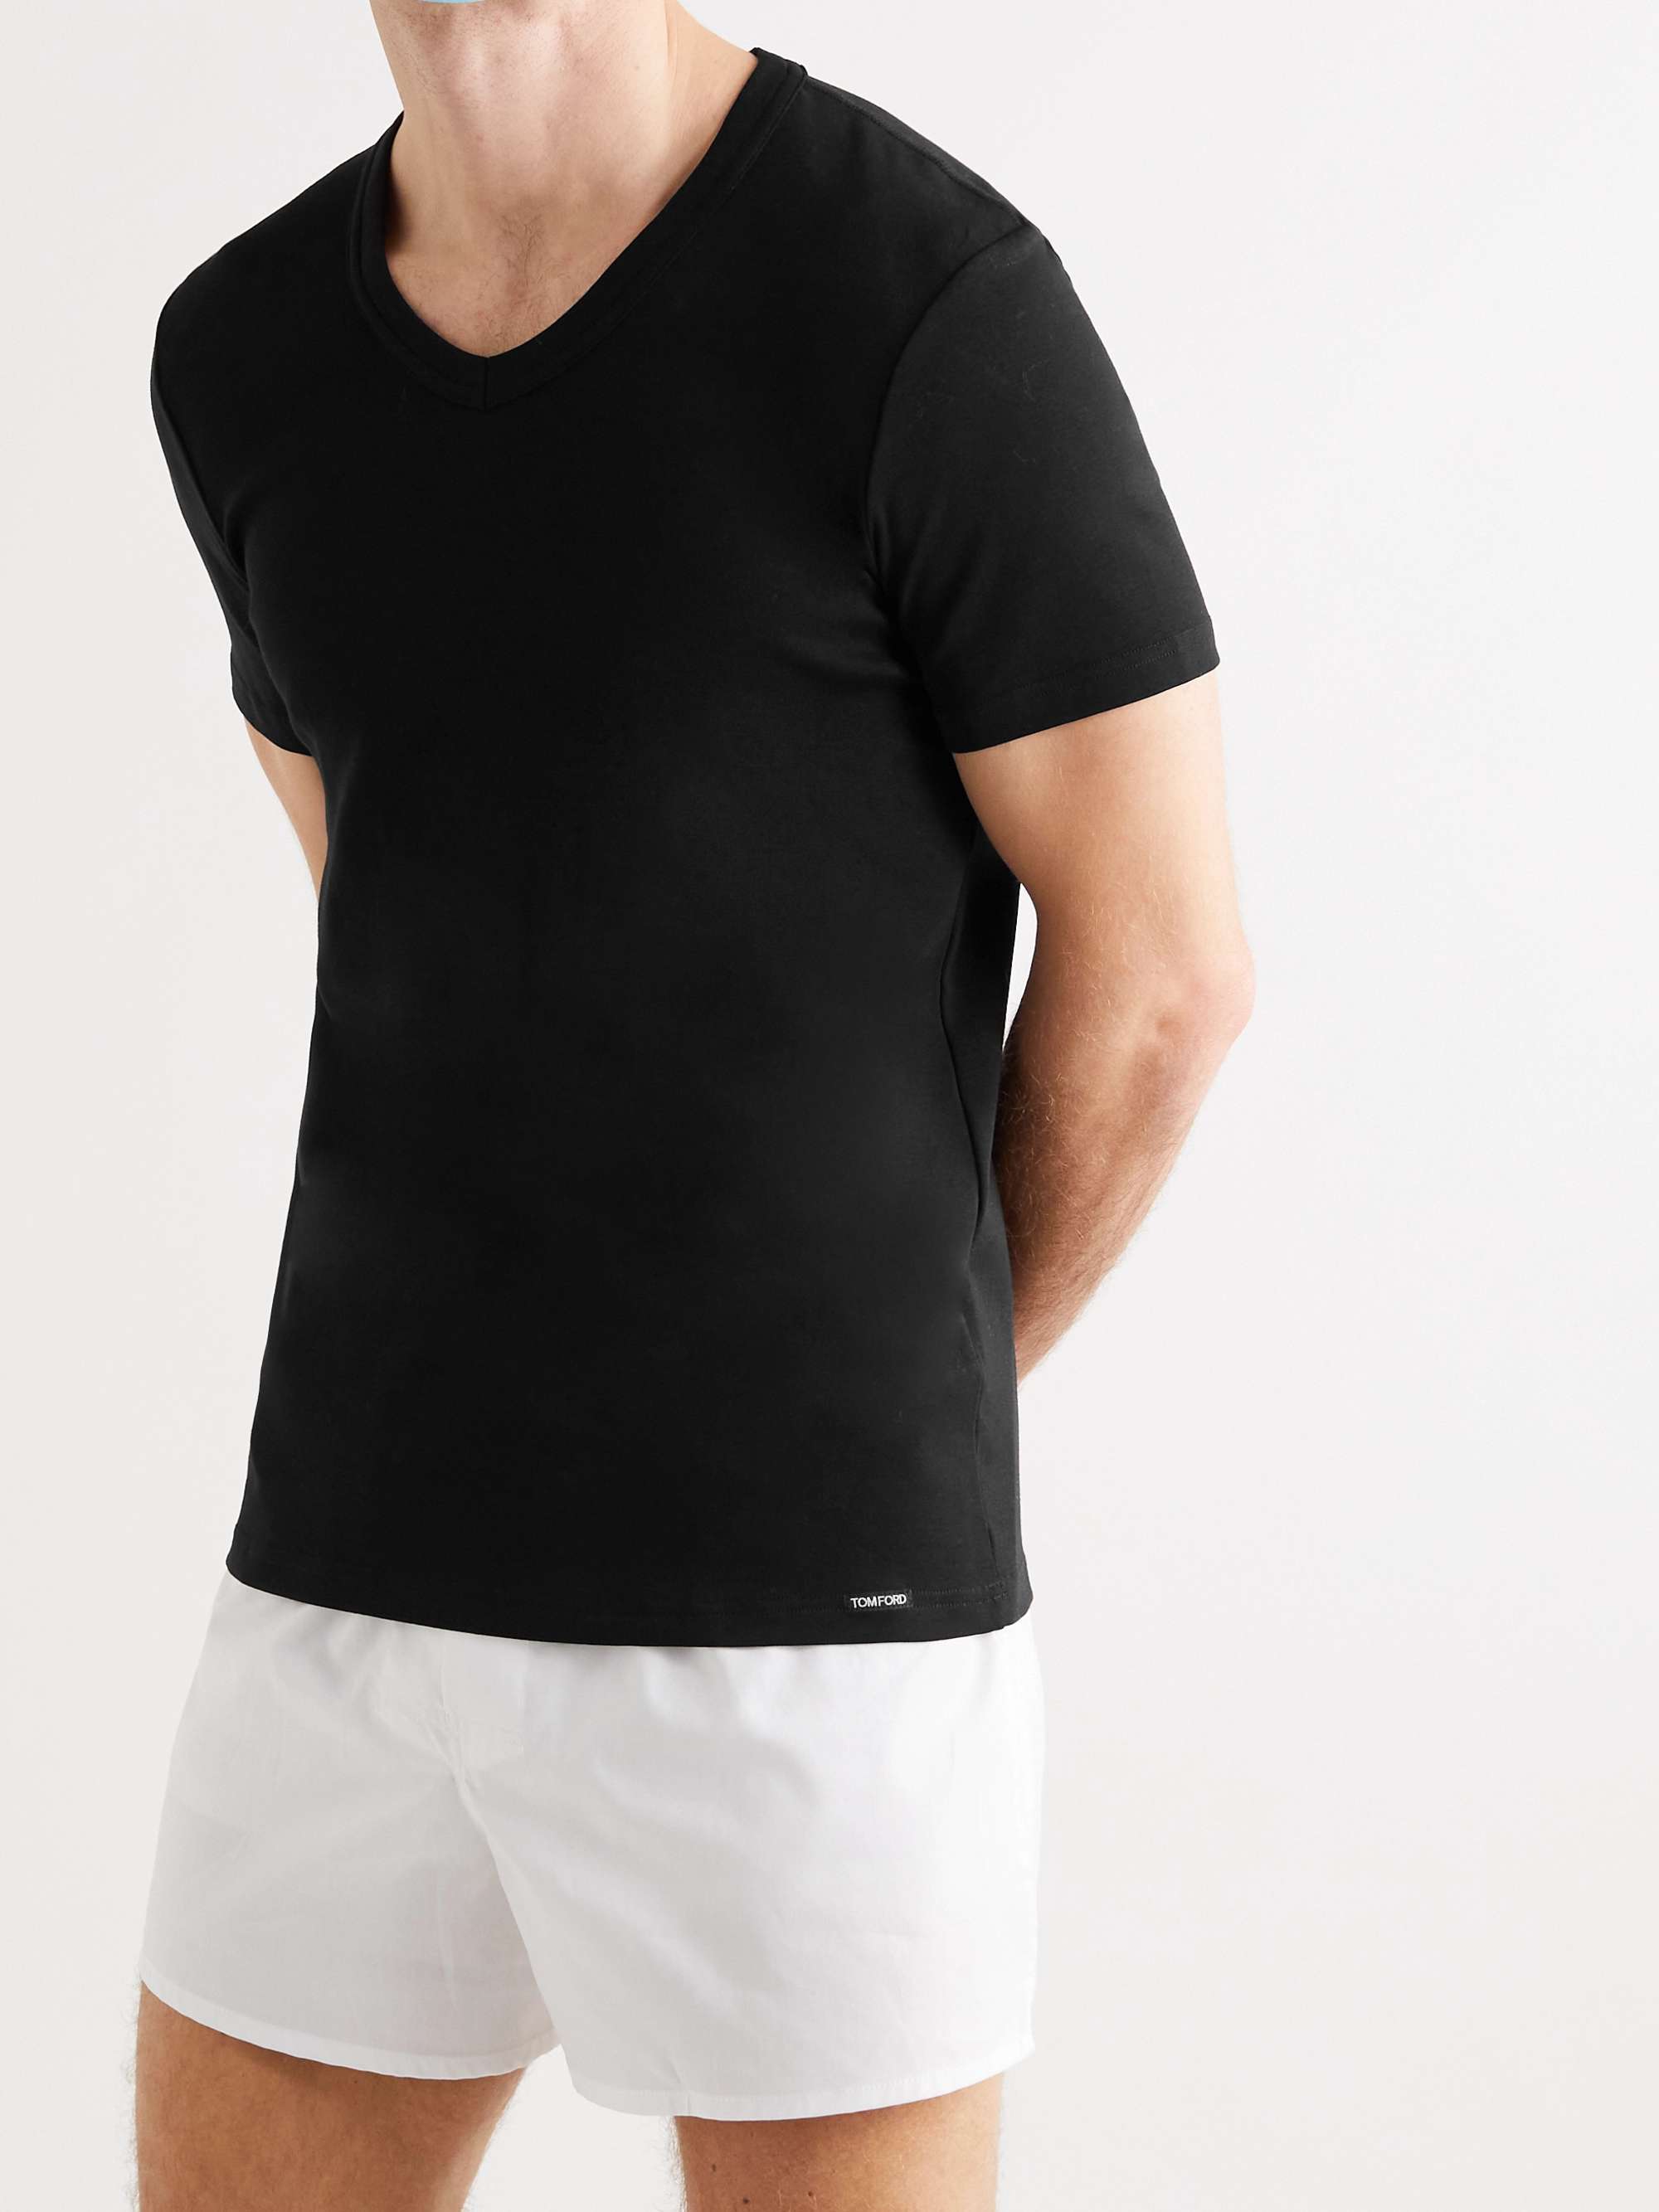 TOM FORD Slim-Fit Stretch-Cotton Jersey T-Shirt for Men | MR PORTER